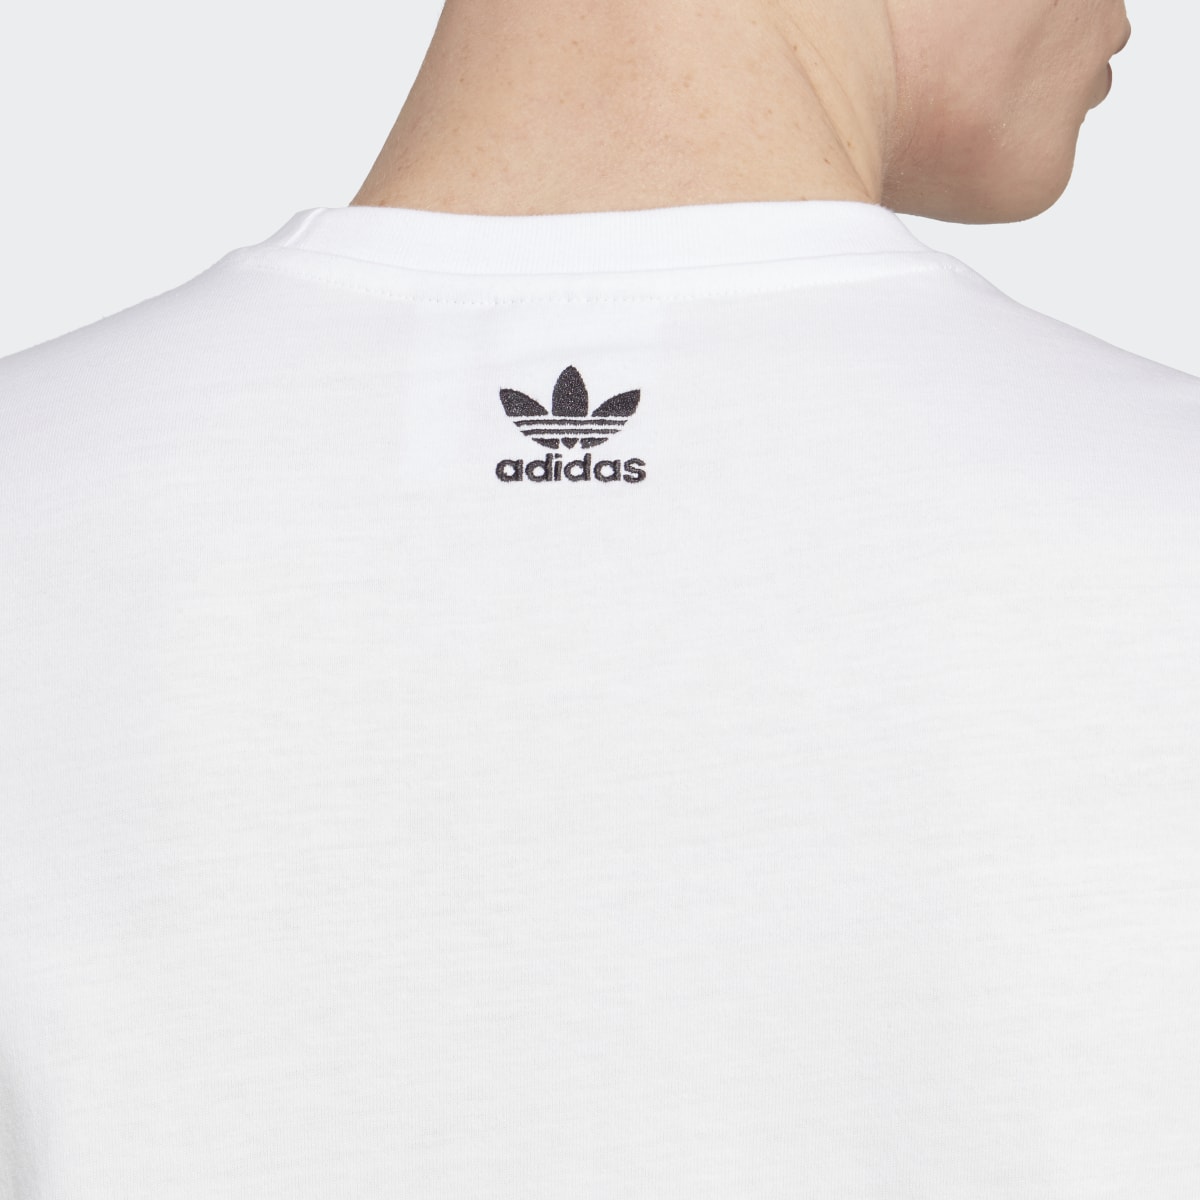 Adidas T-shirt New Age. 7